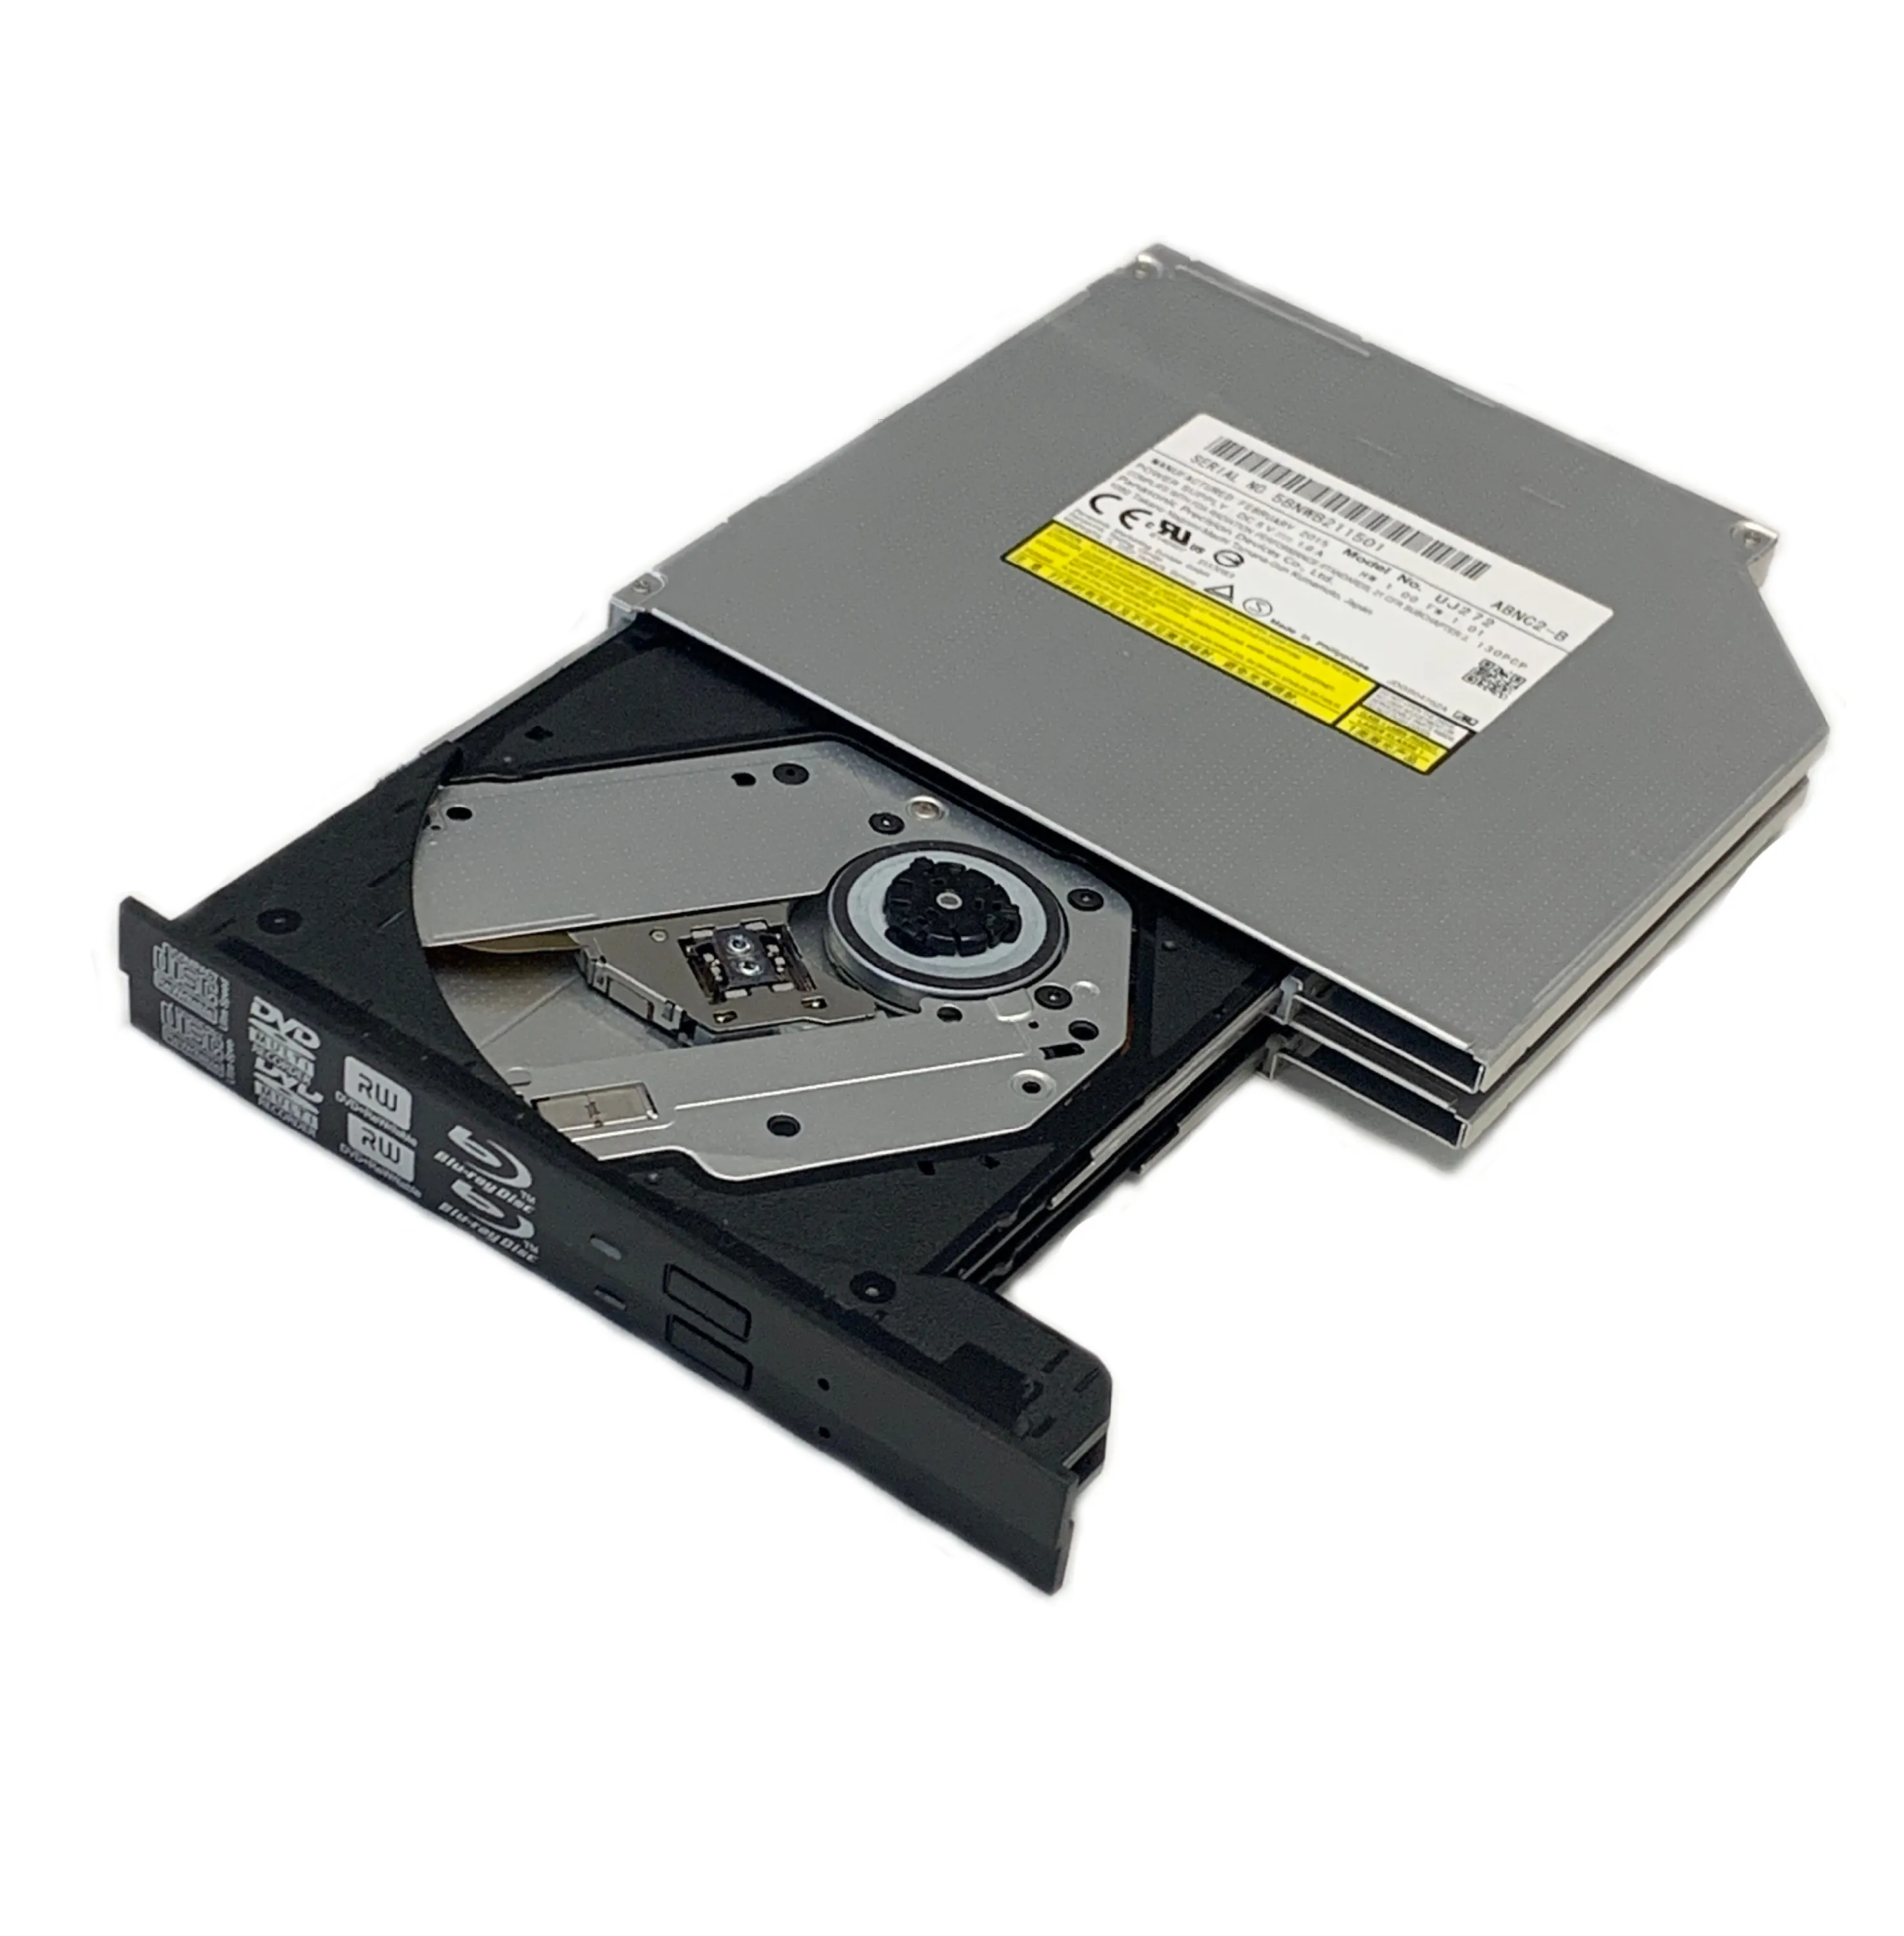 SATA Blu-ray DVD Burner Internal Built-In Laptop/Desktop DVD-RW Optical Drive